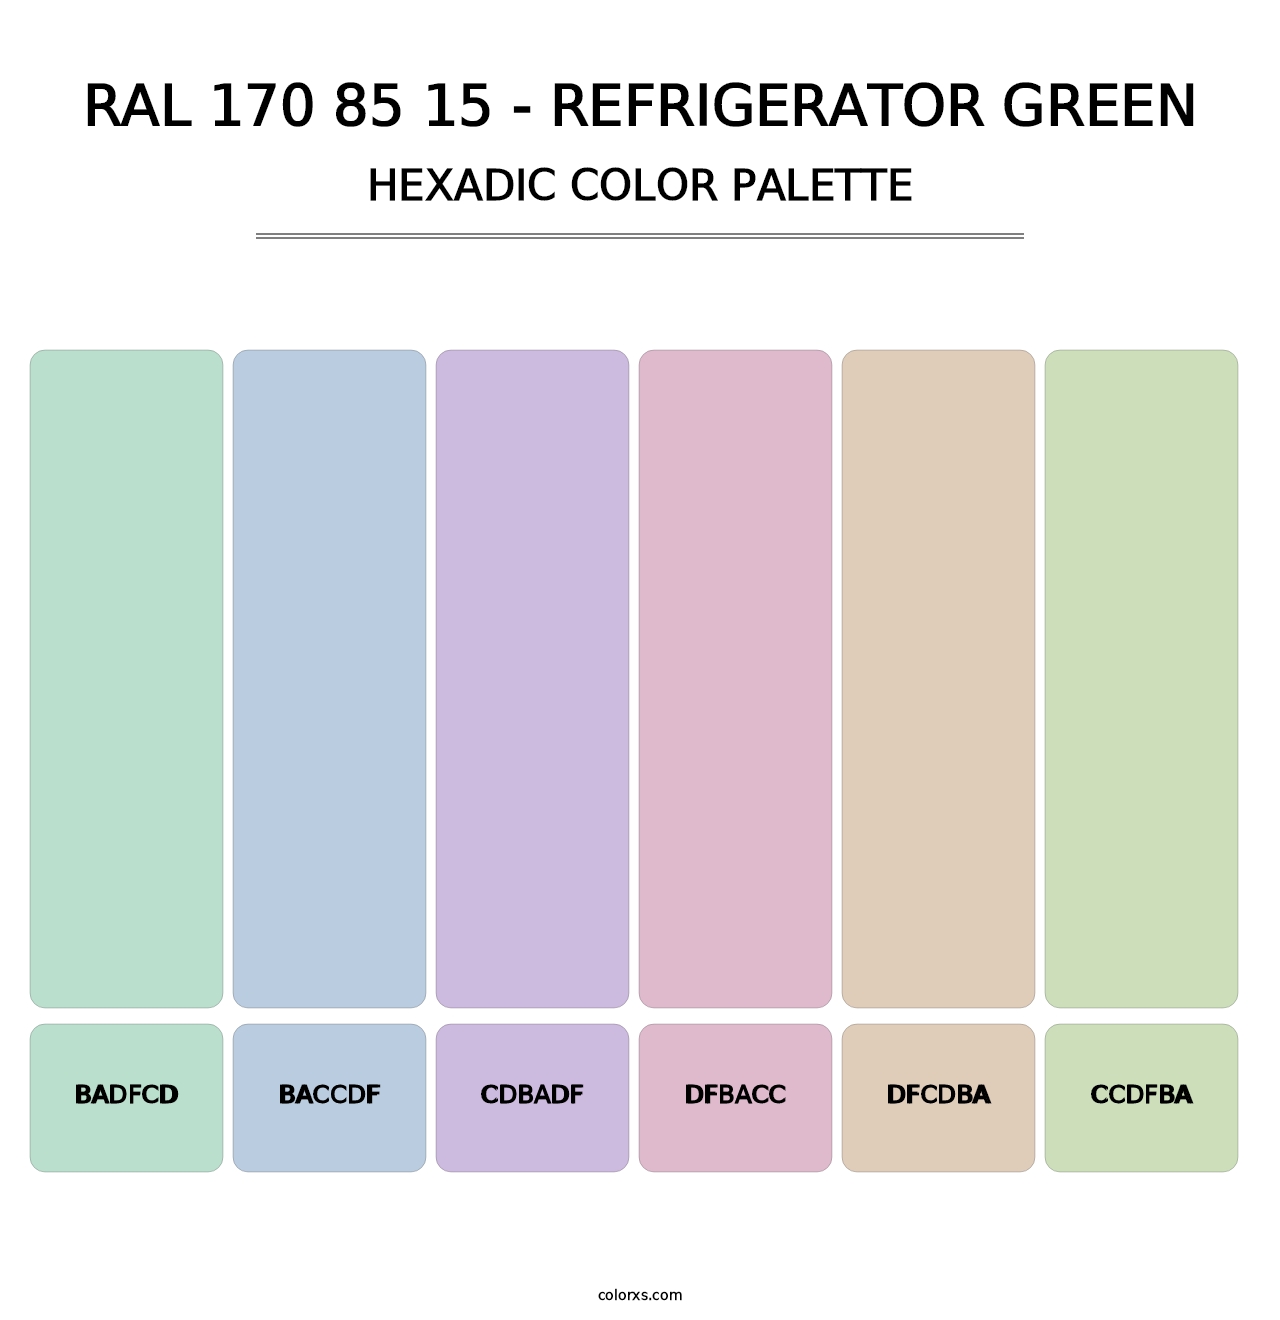 RAL 170 85 15 - Refrigerator Green - Hexadic Color Palette